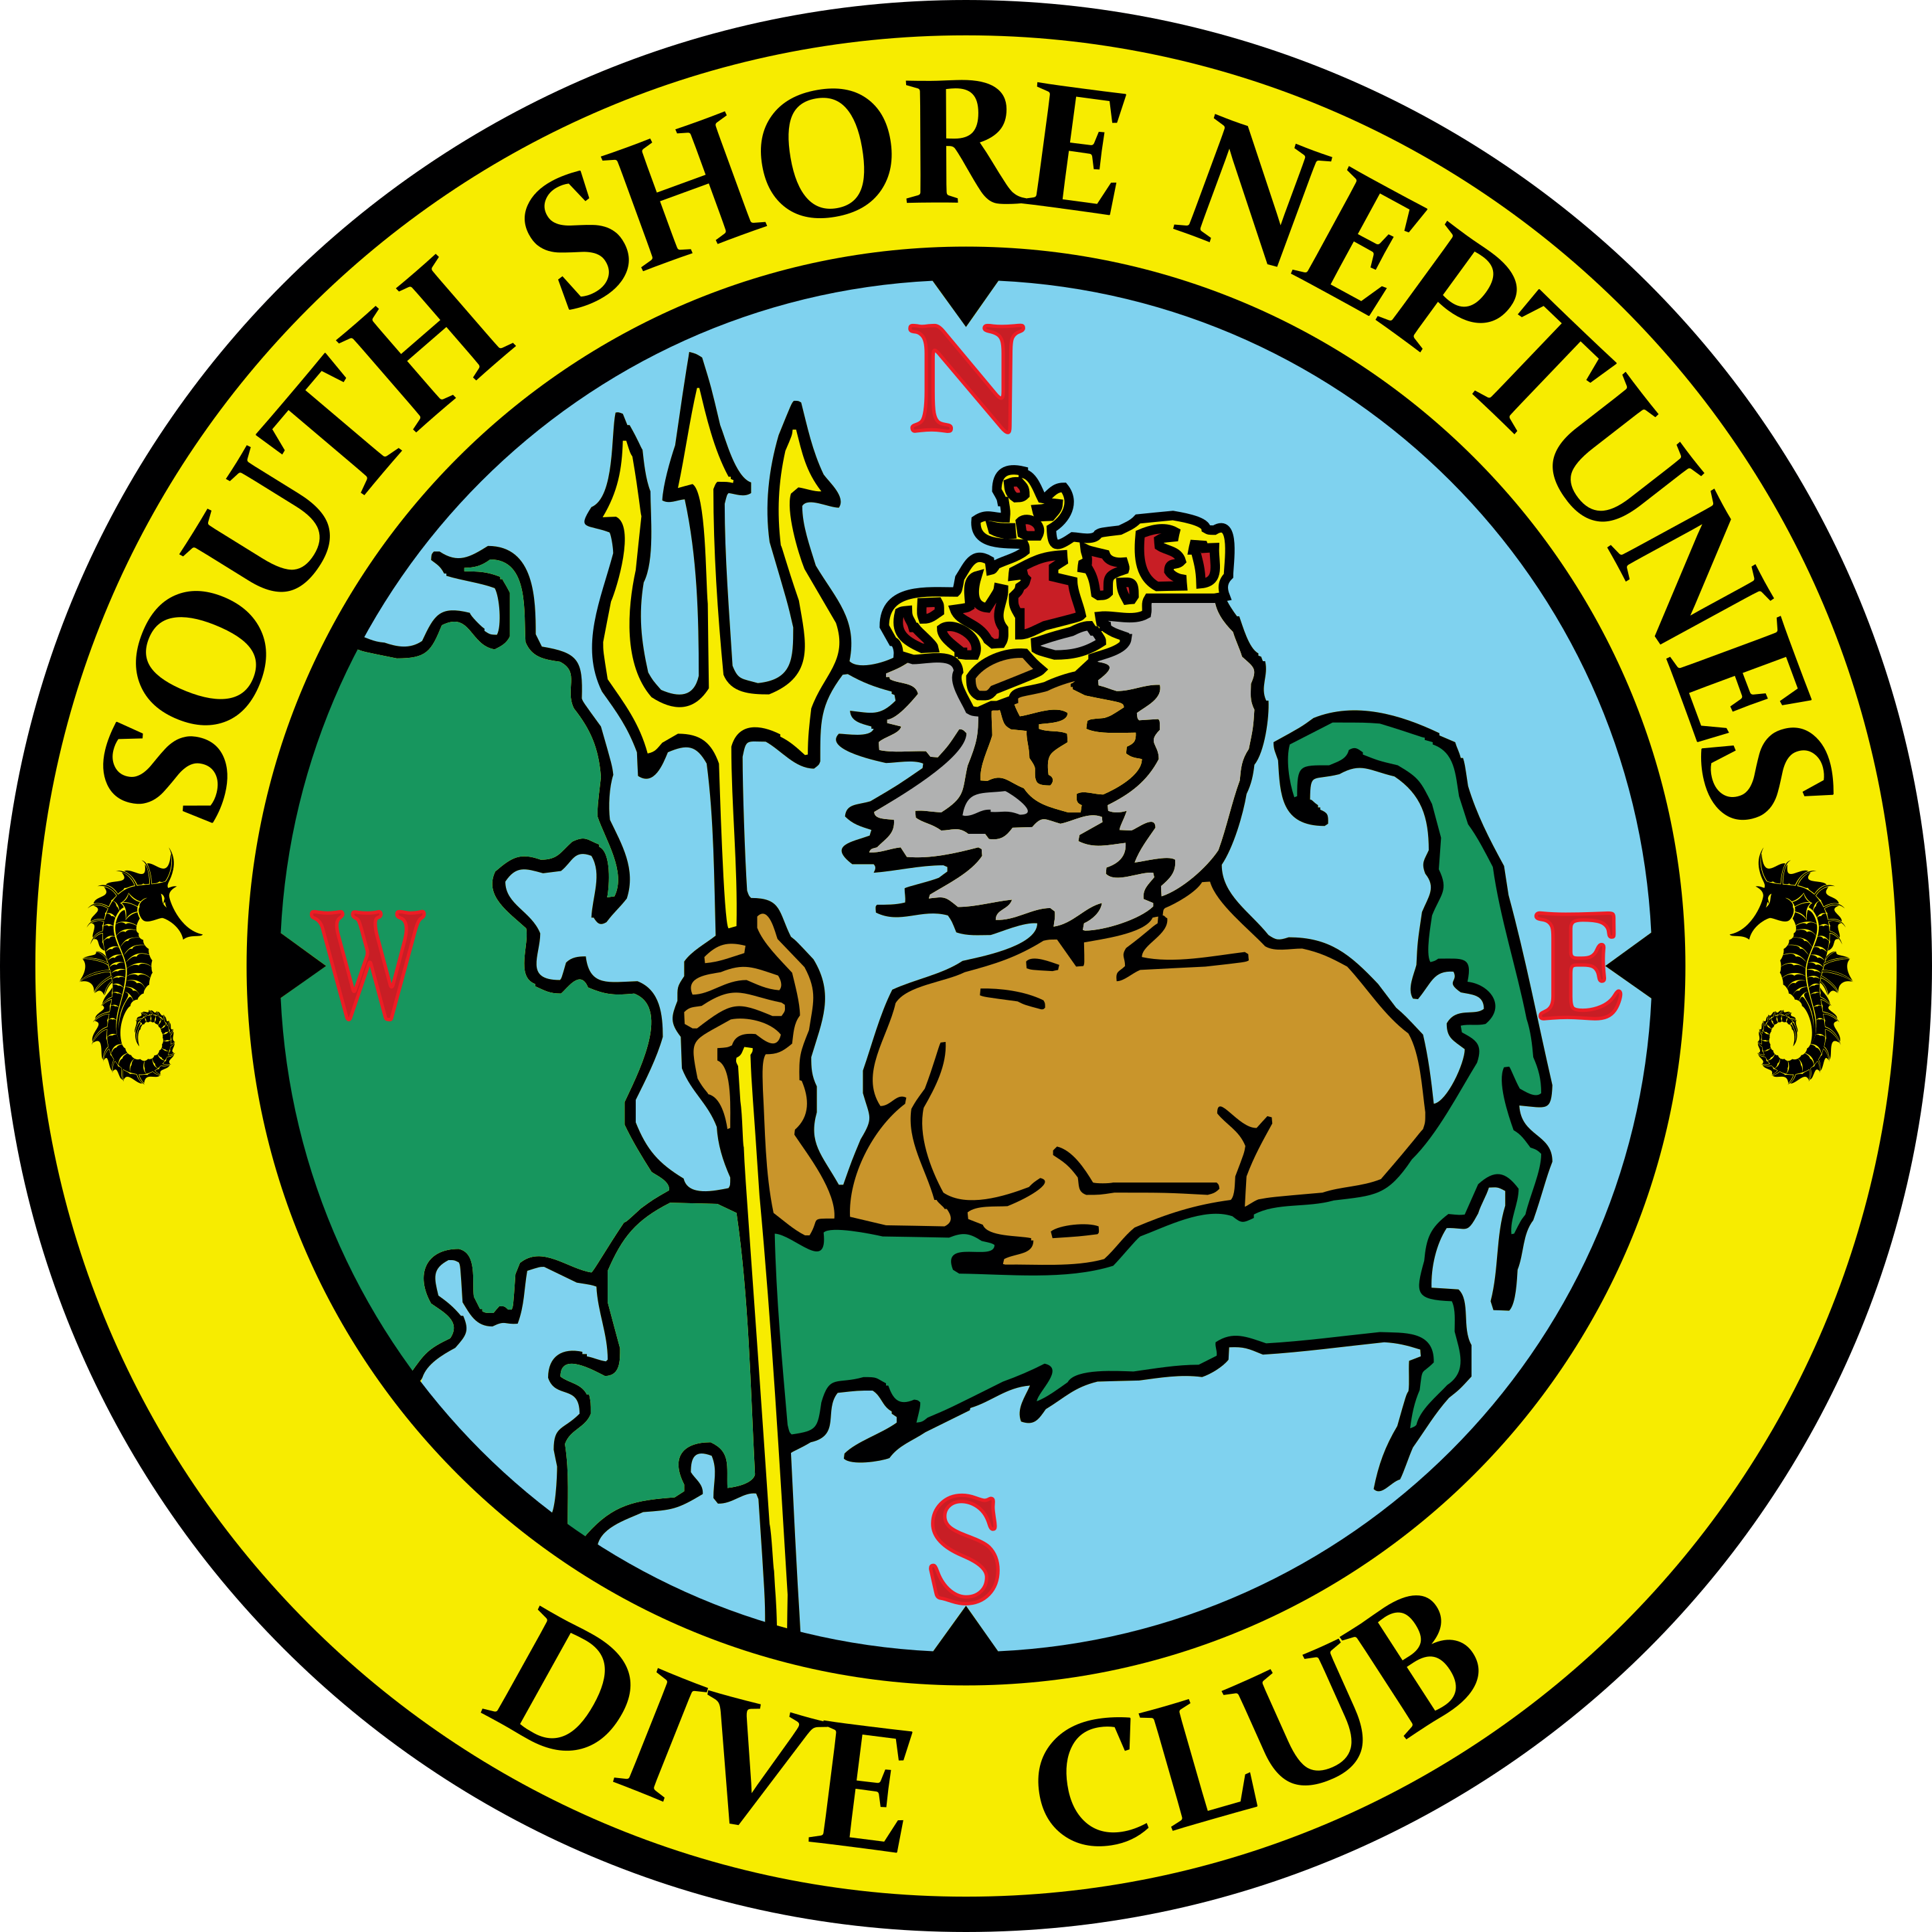 South Shore Neptunes Store